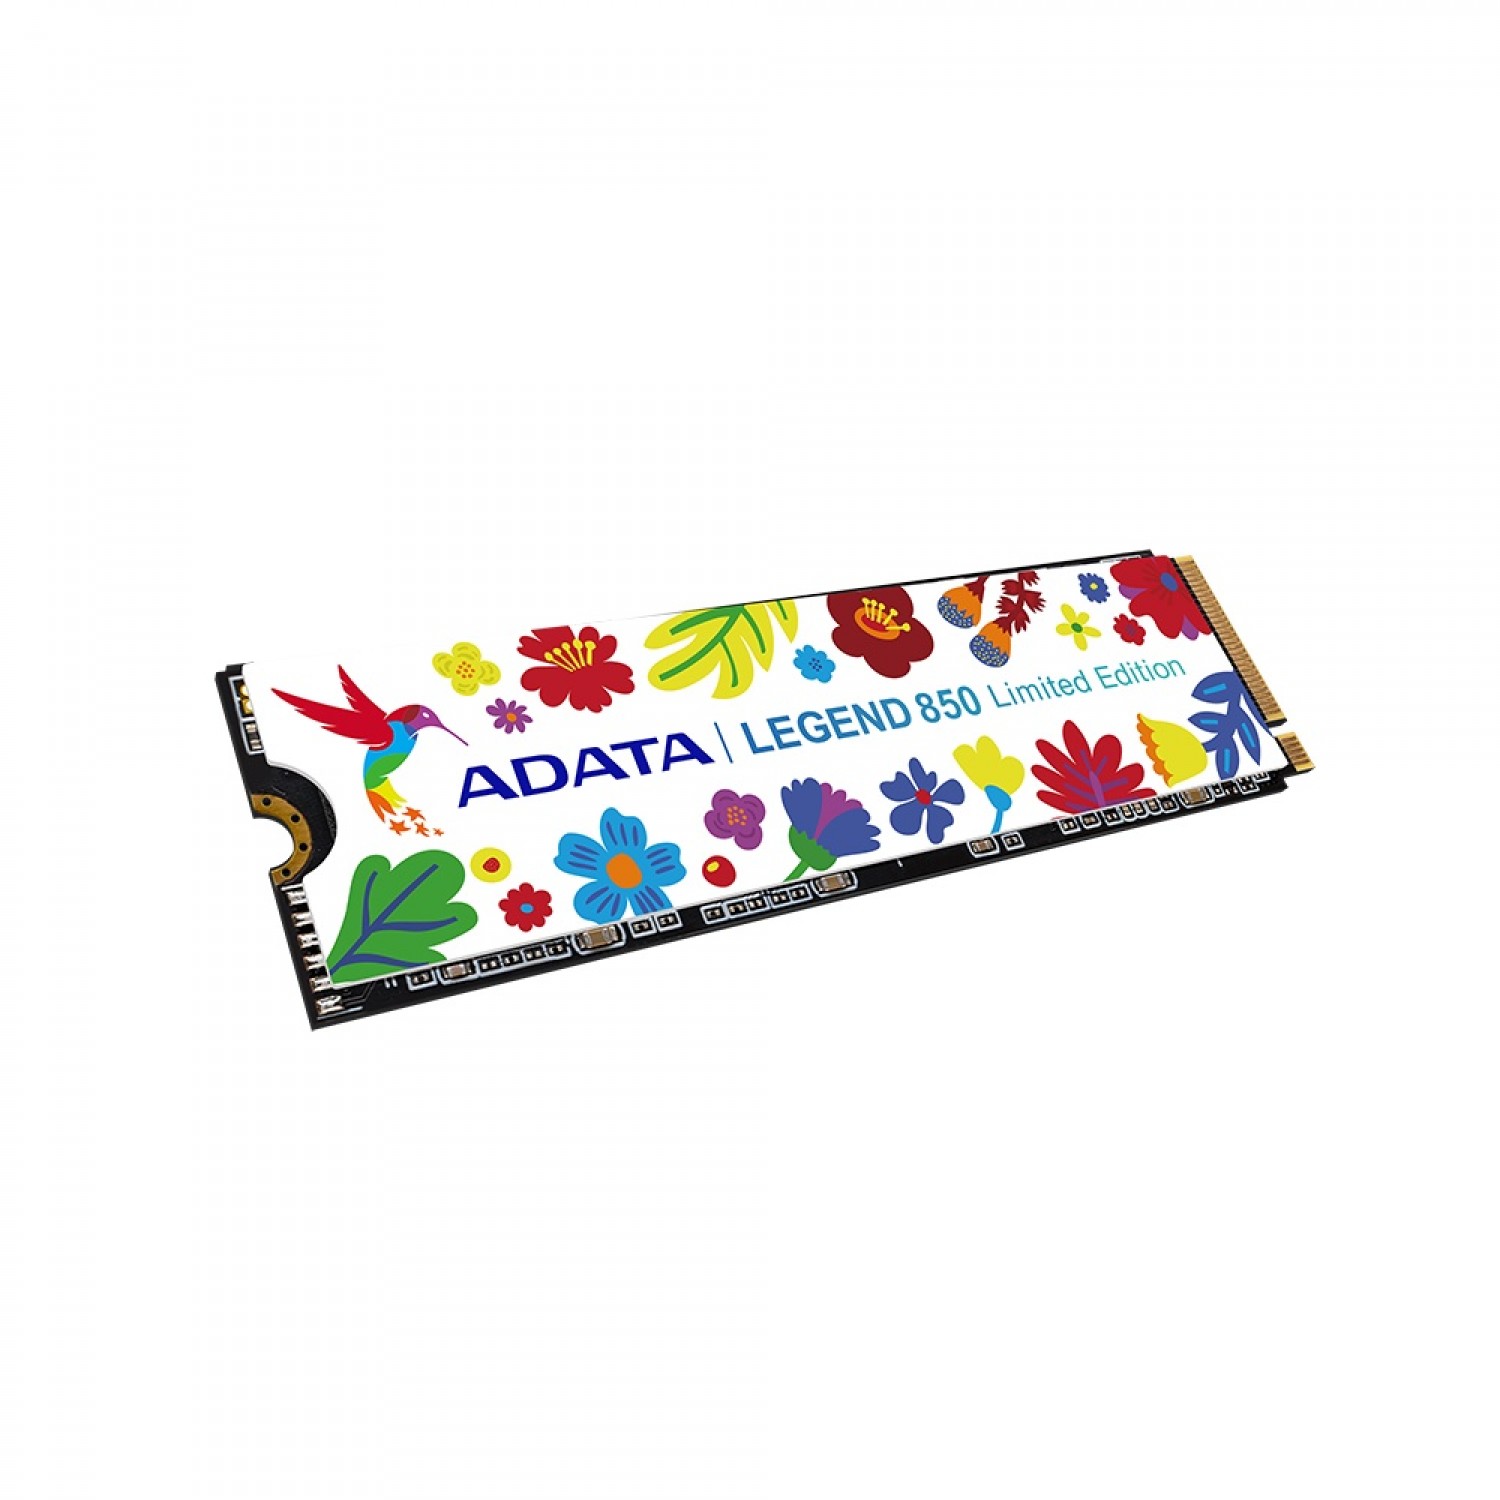 حافظه اس اس دی ADATA Legend 850 512GB Limited Edition-3